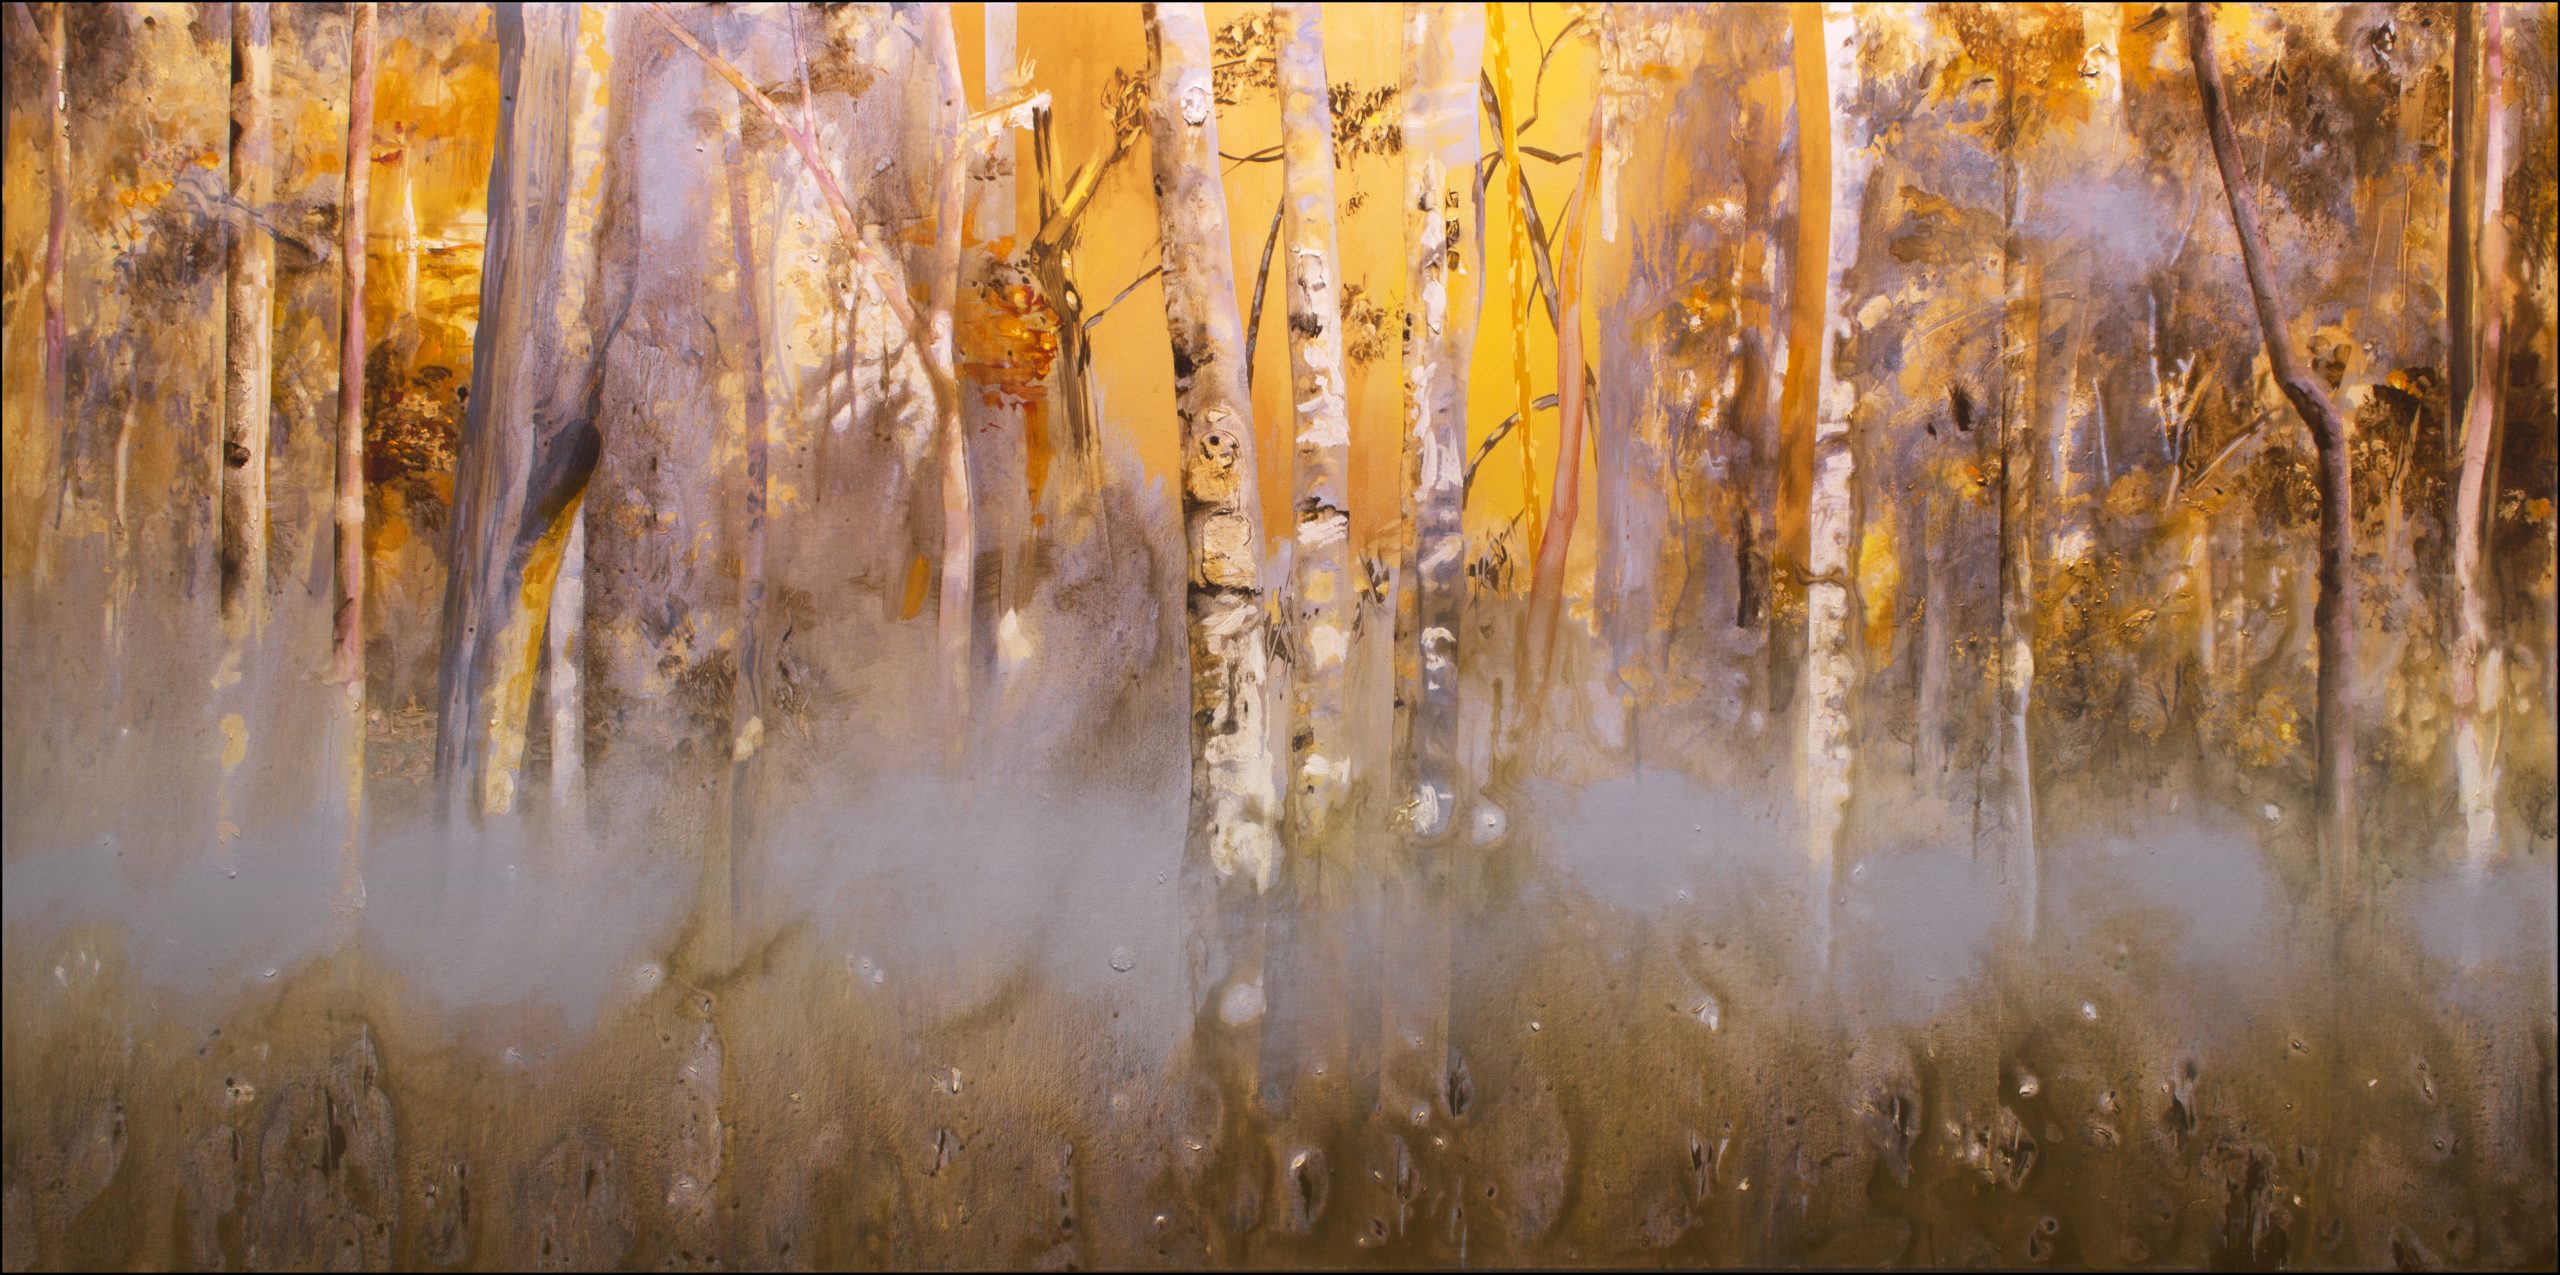 Neil Taylor 'Forest Dawn II' acrylic on canvas 91 x 183cm $16,500 SOLD